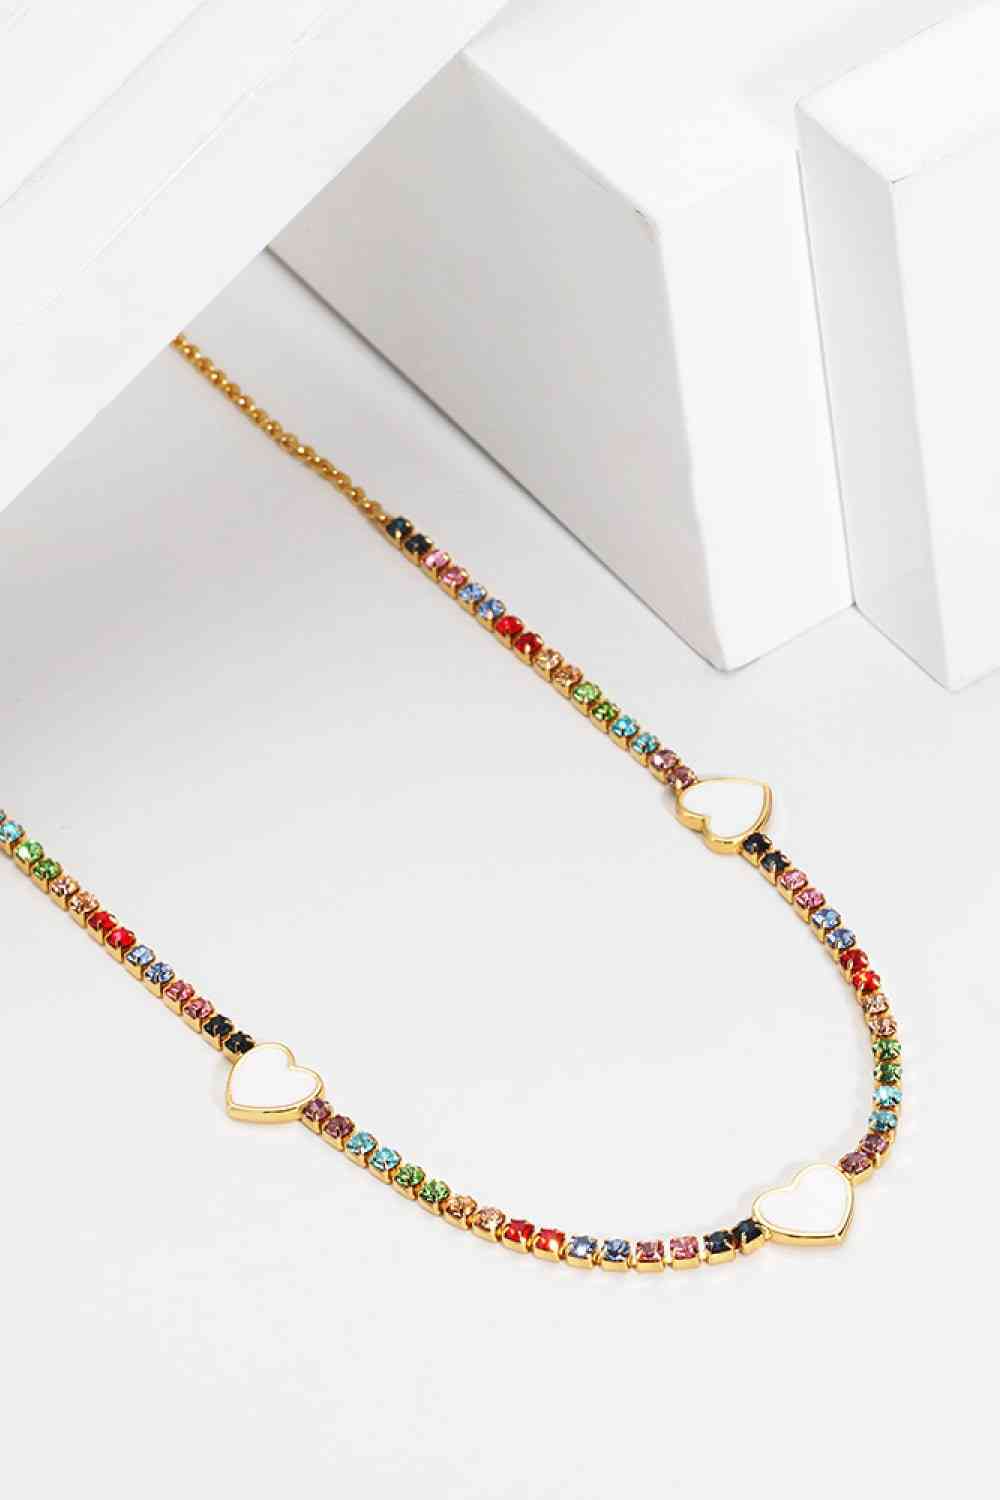 Crystal Heart Necklace - Pahabu - Women Fashion & Jewelry